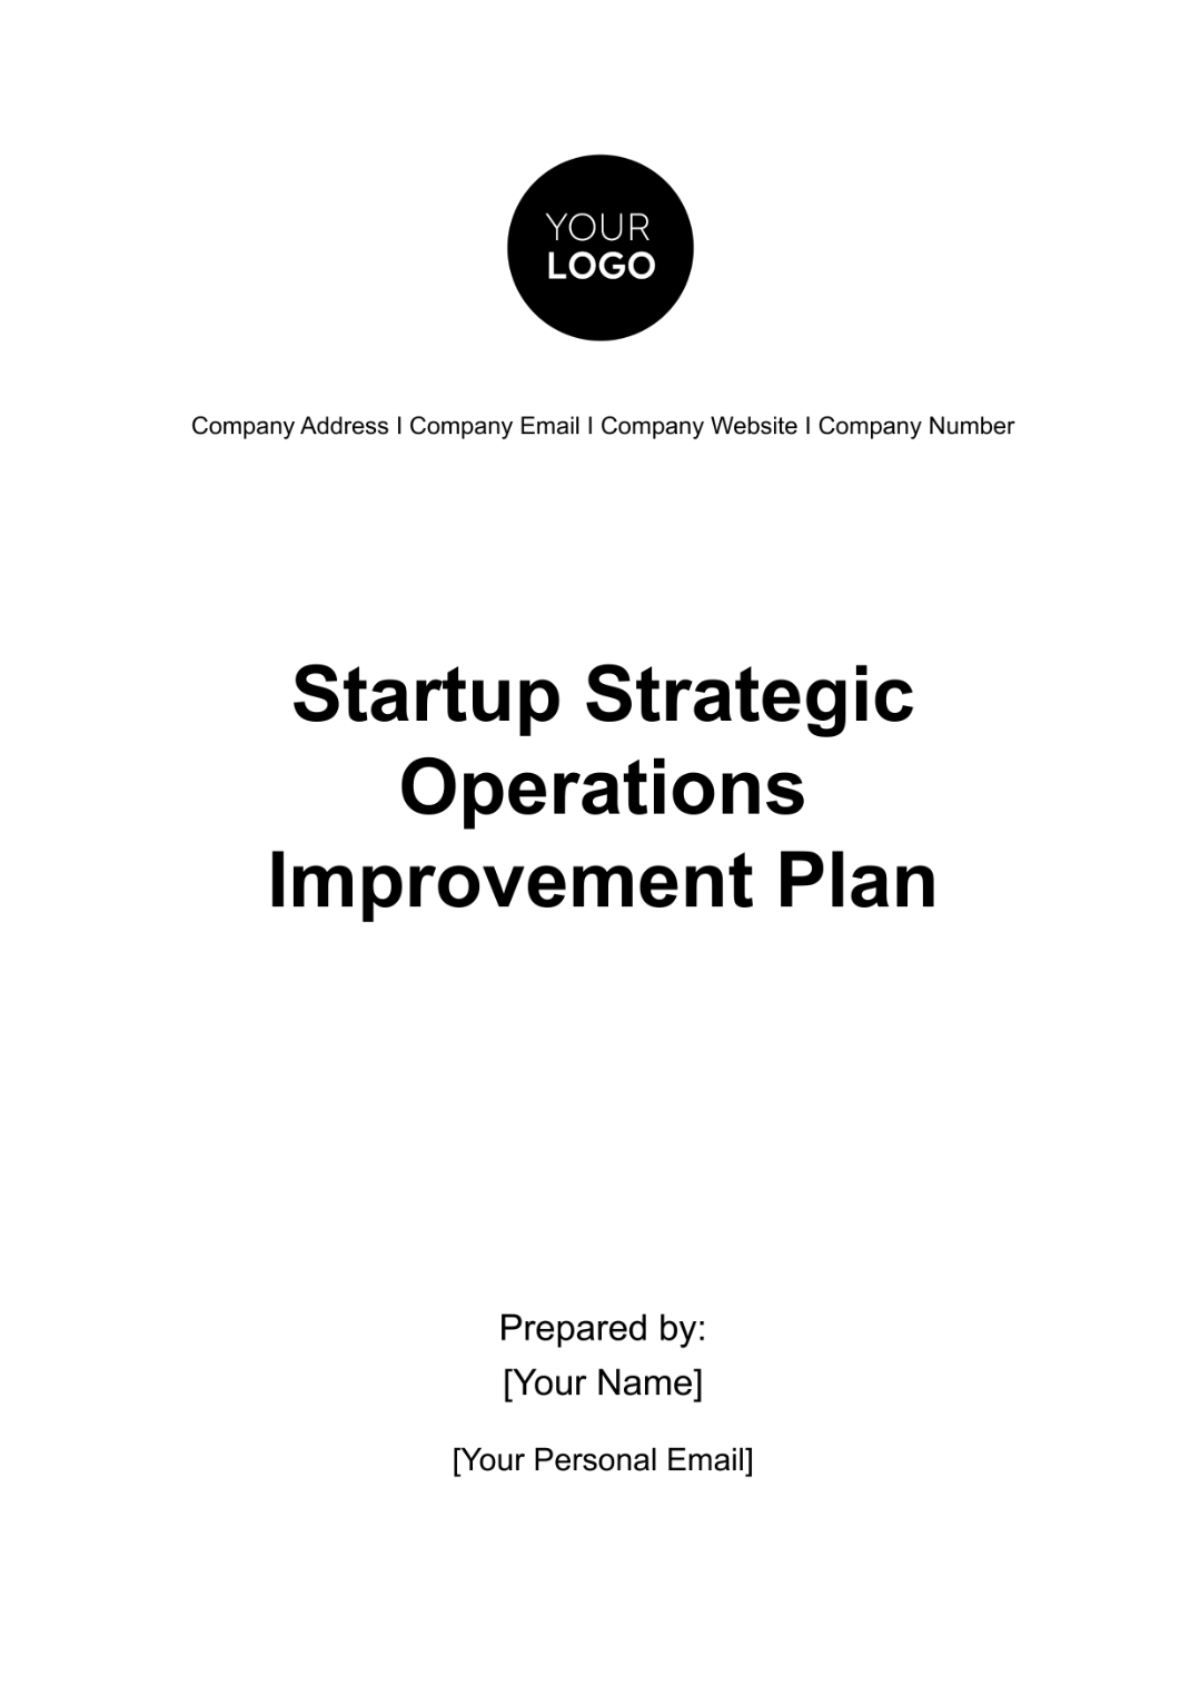 Startup Strategic Operations Improvement Plan Template